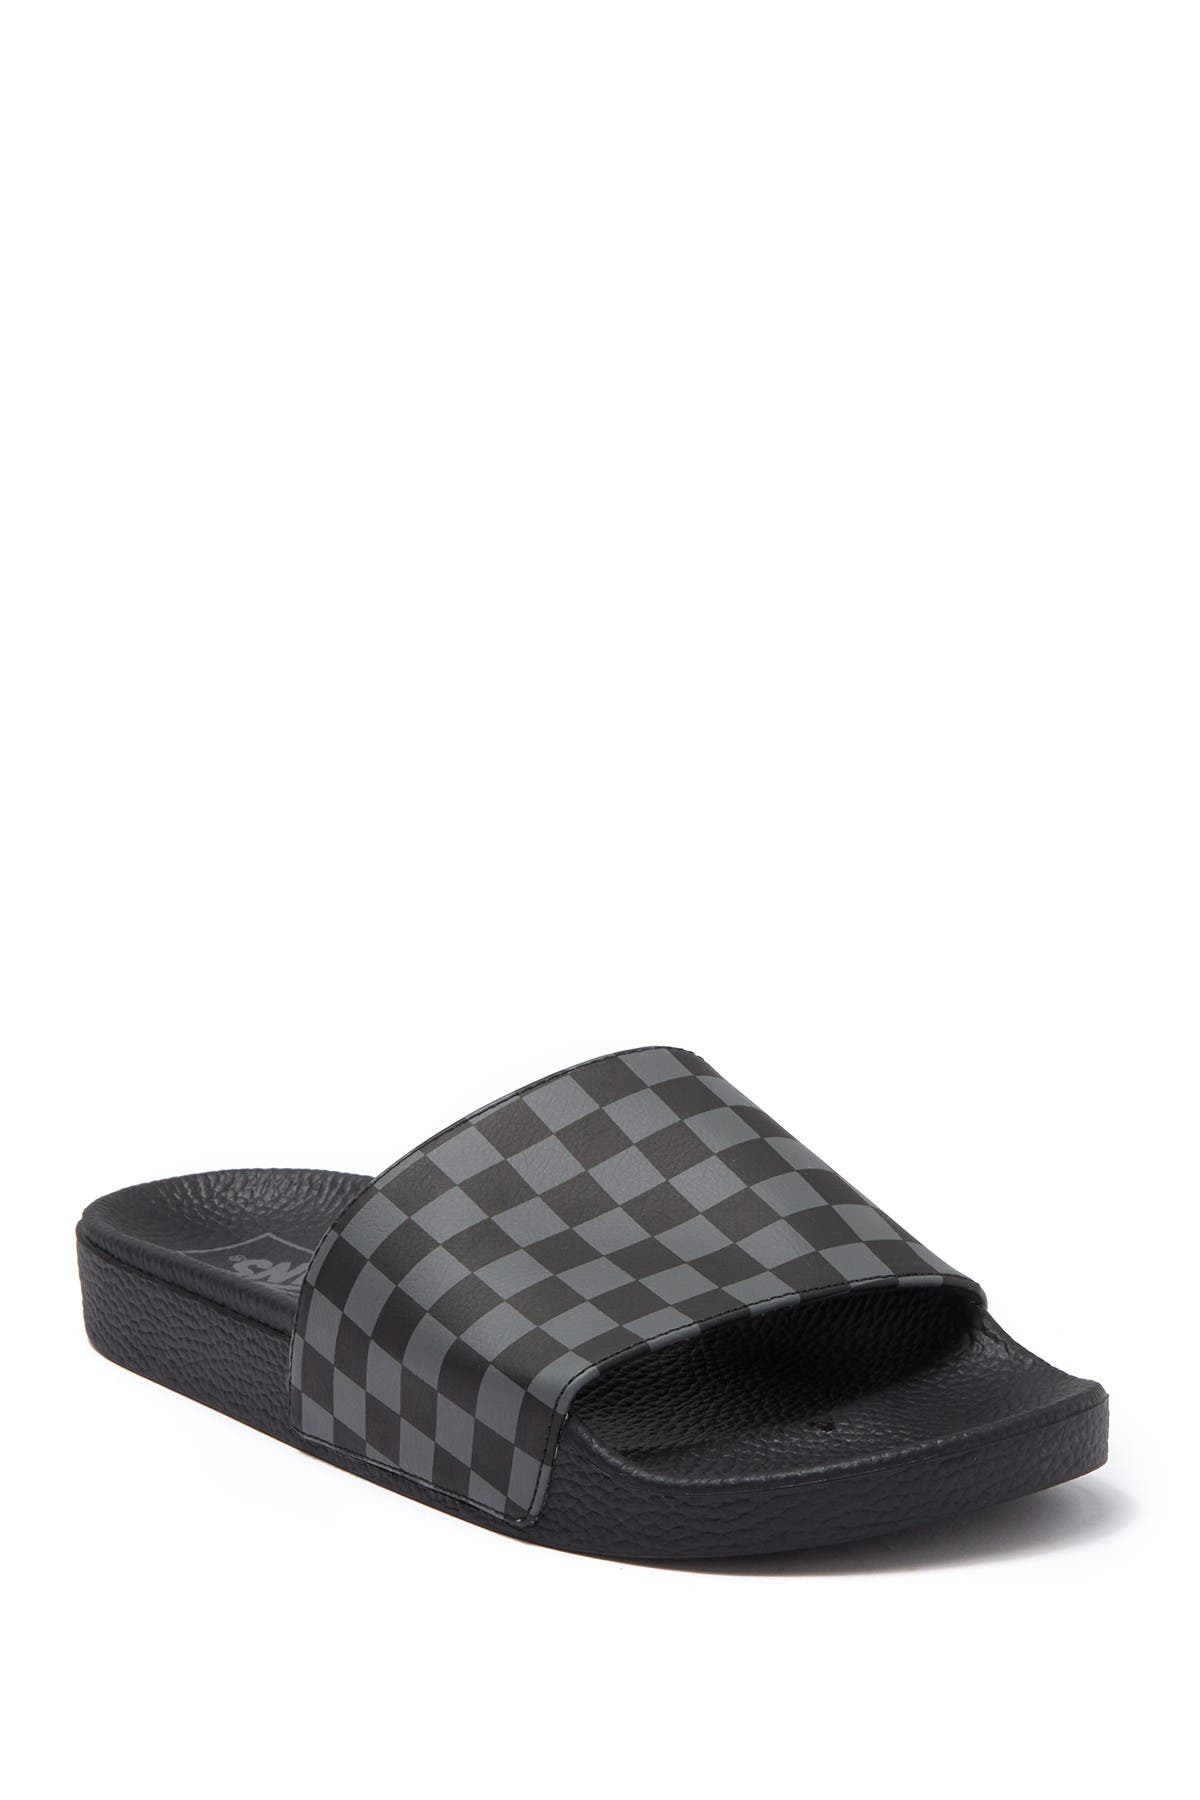 sandal checkerboard